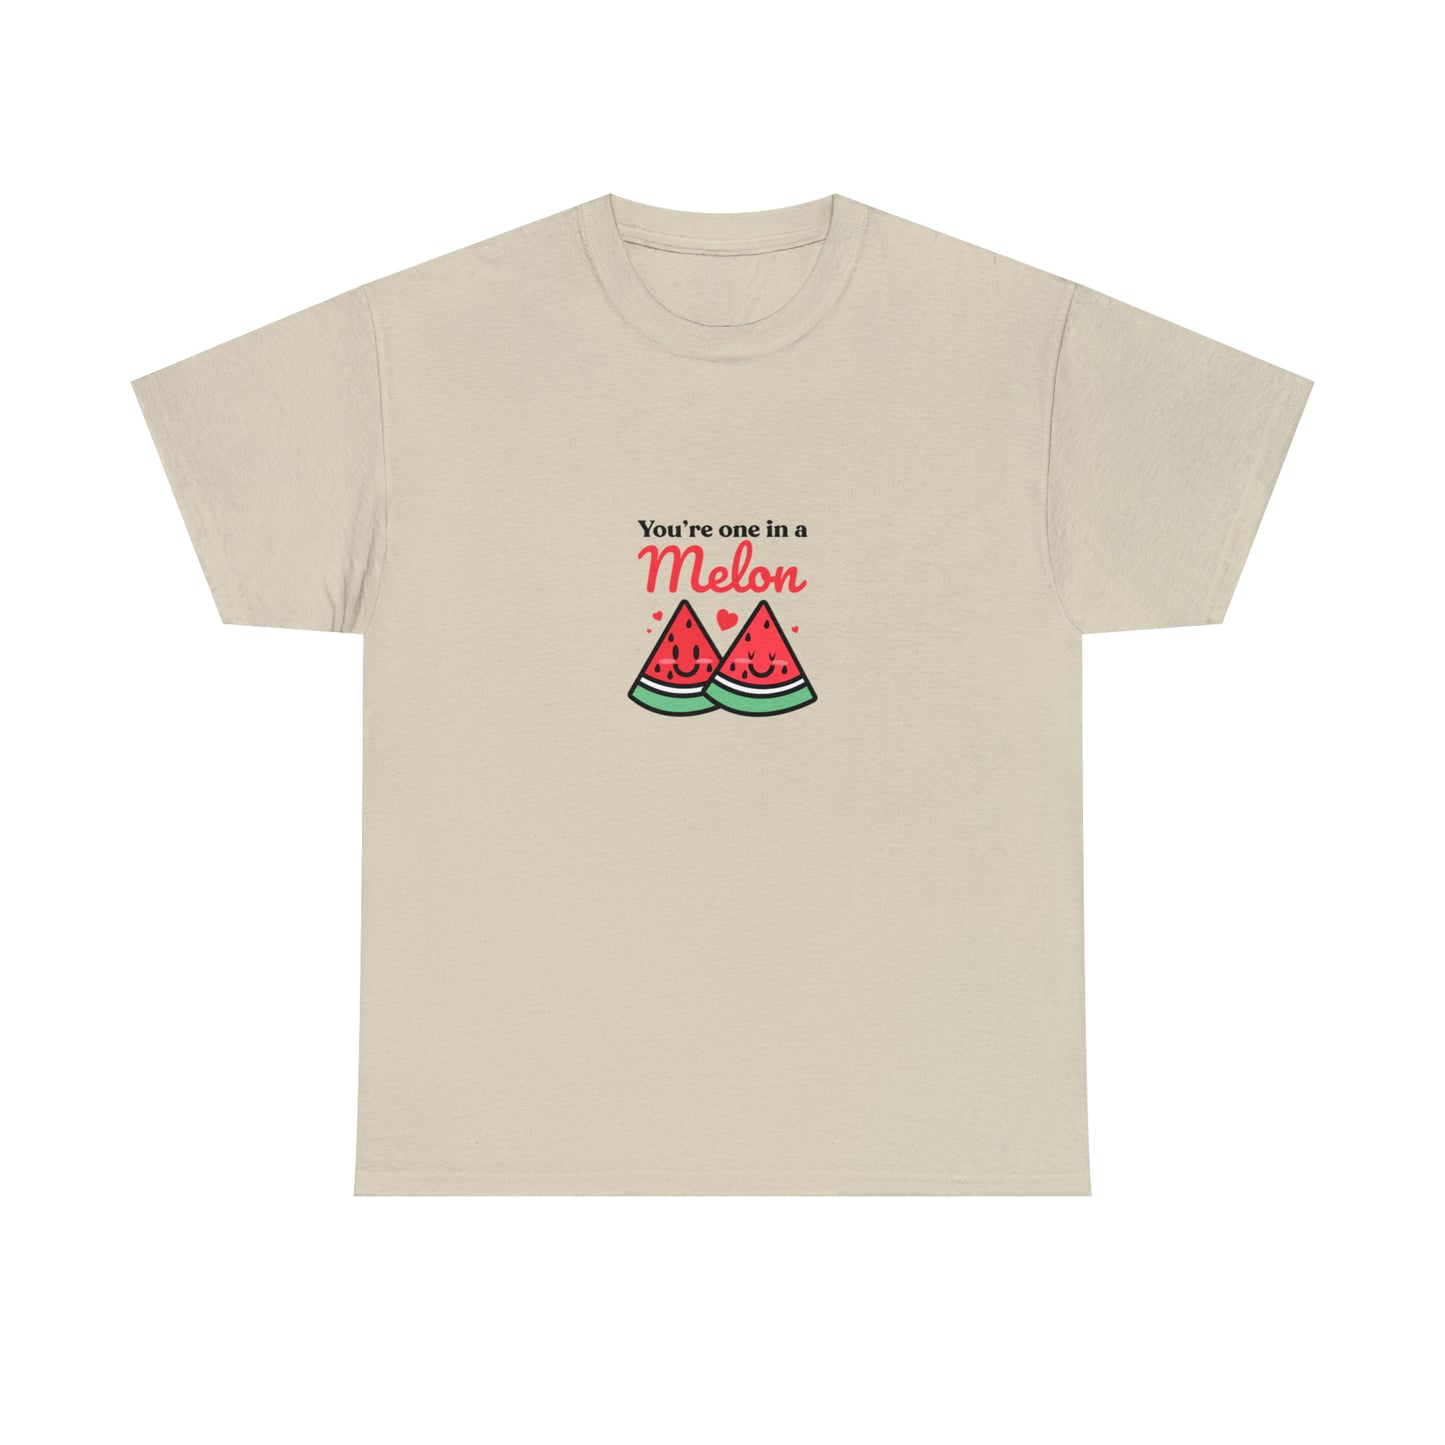 Custom Parody T-shirt, You're one in a melon design